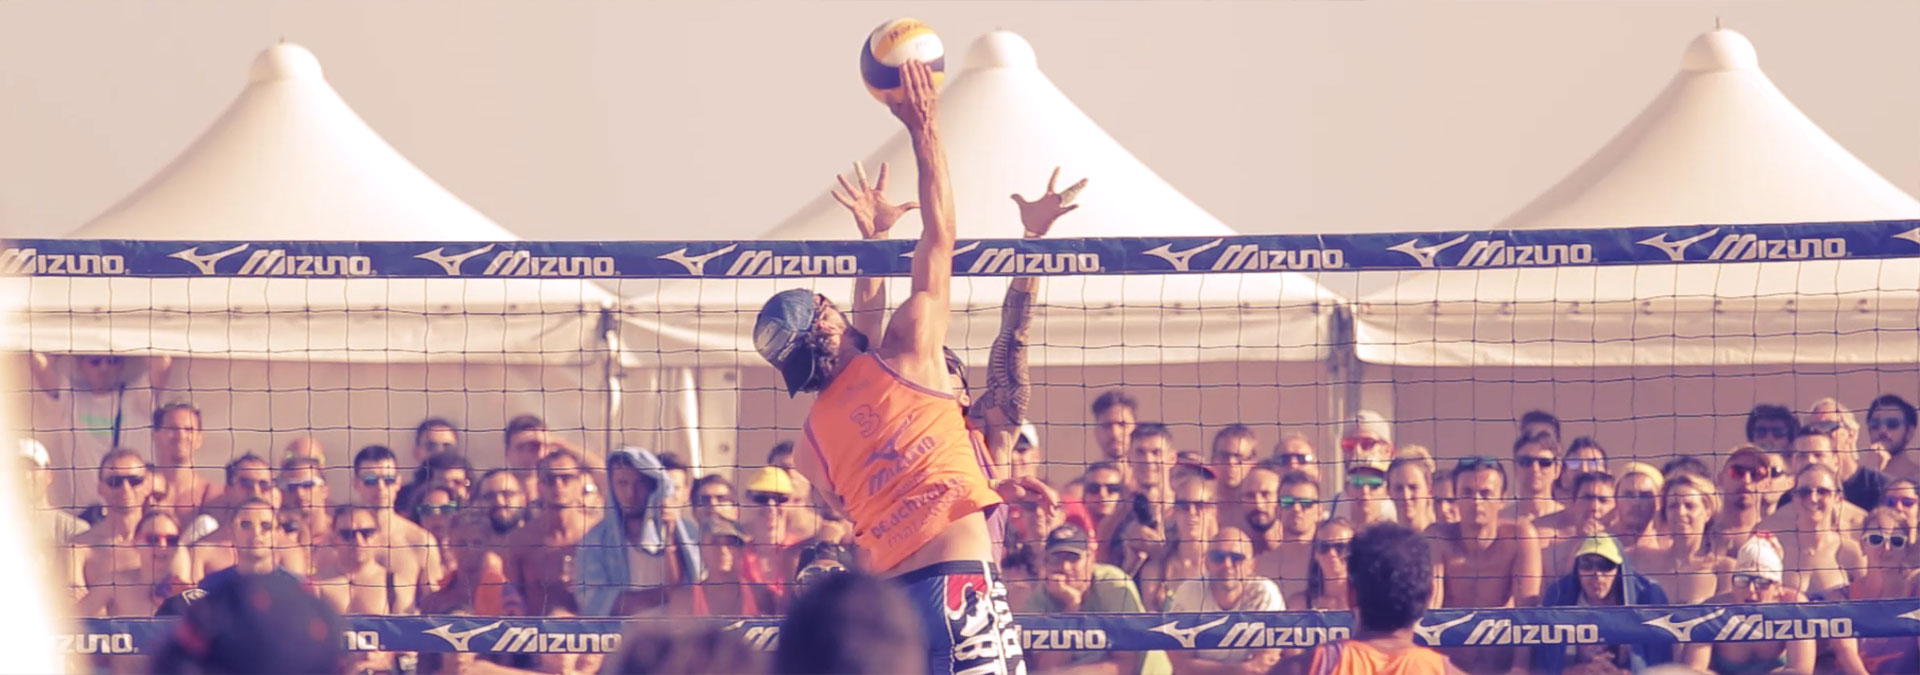 mizuno volleyball 2015